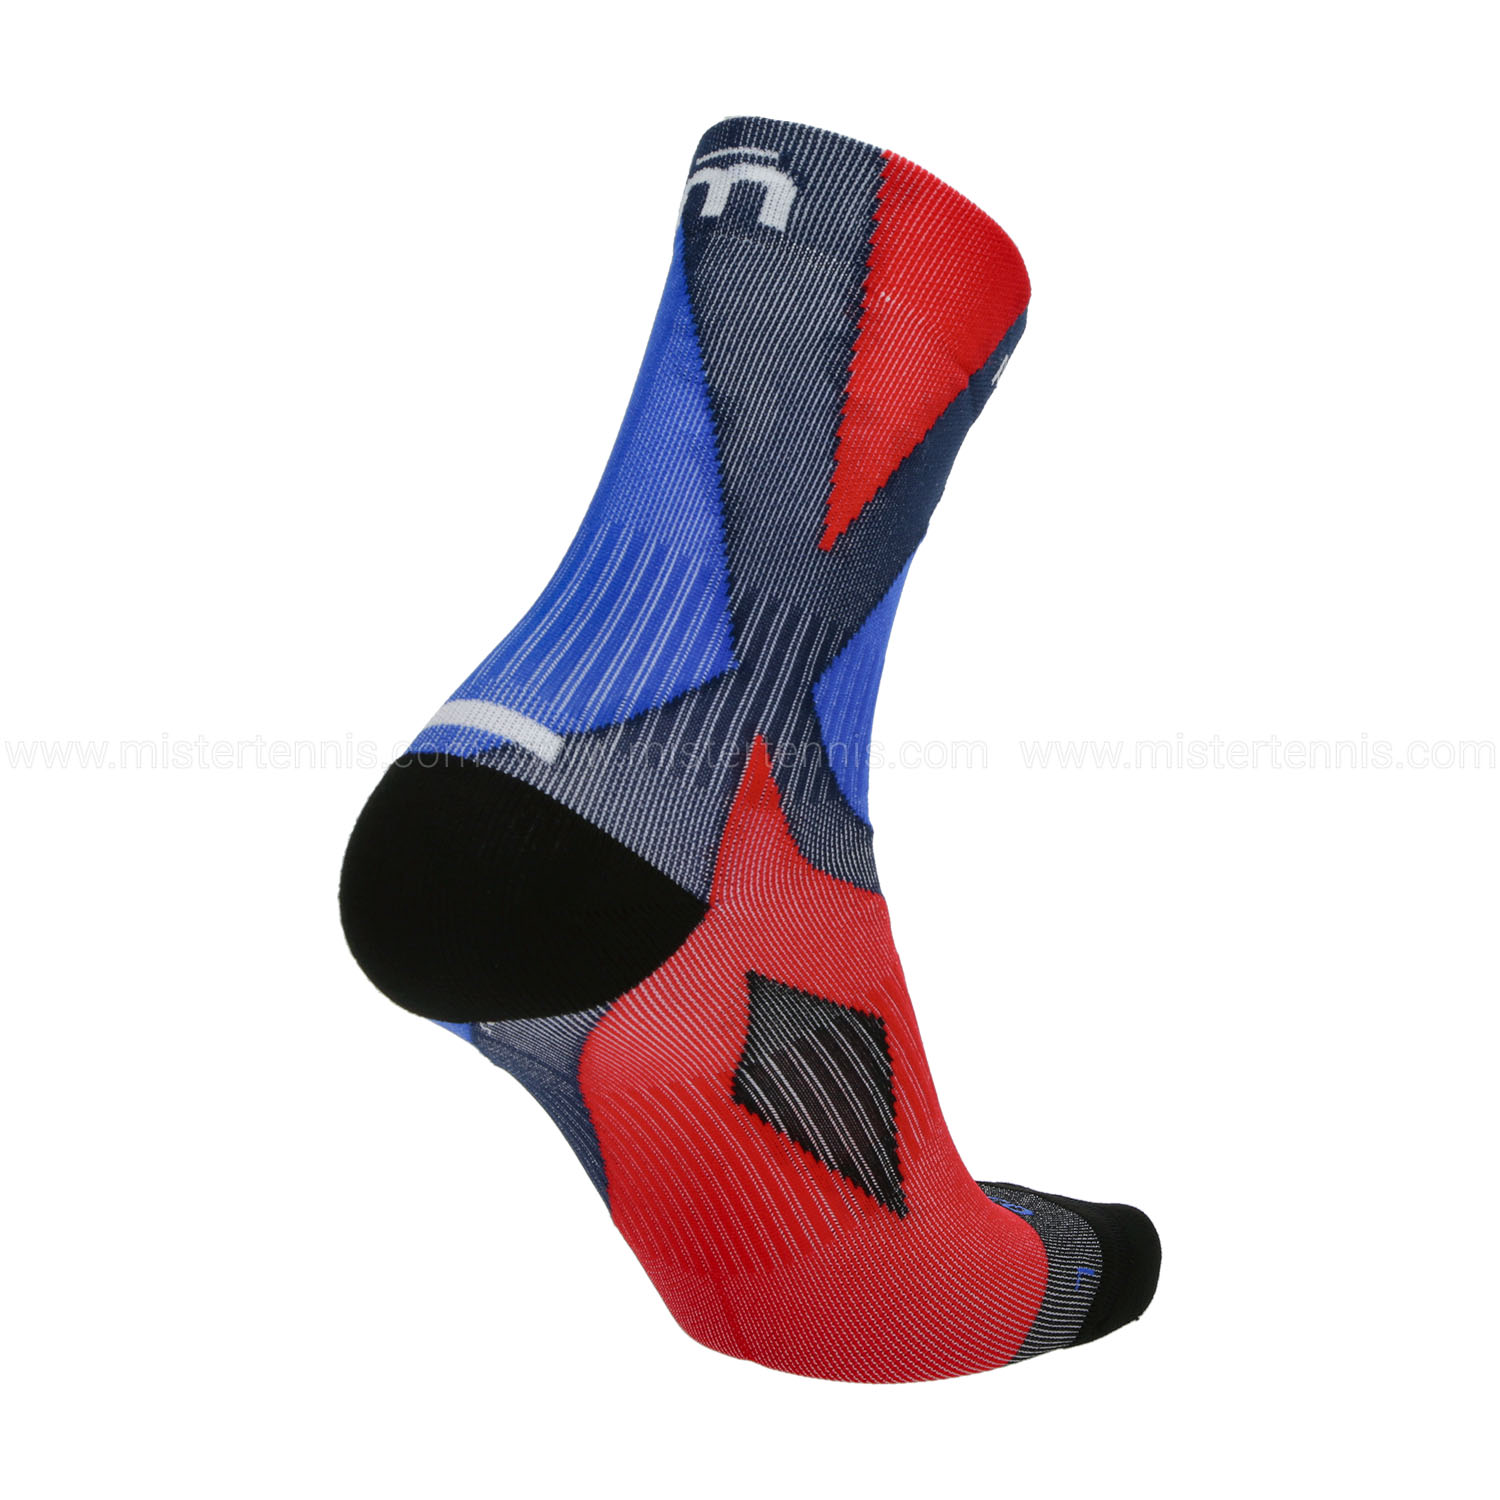 Mico Light Weight X-Performance Socks - Rosso/Blu/Nero/Bianco